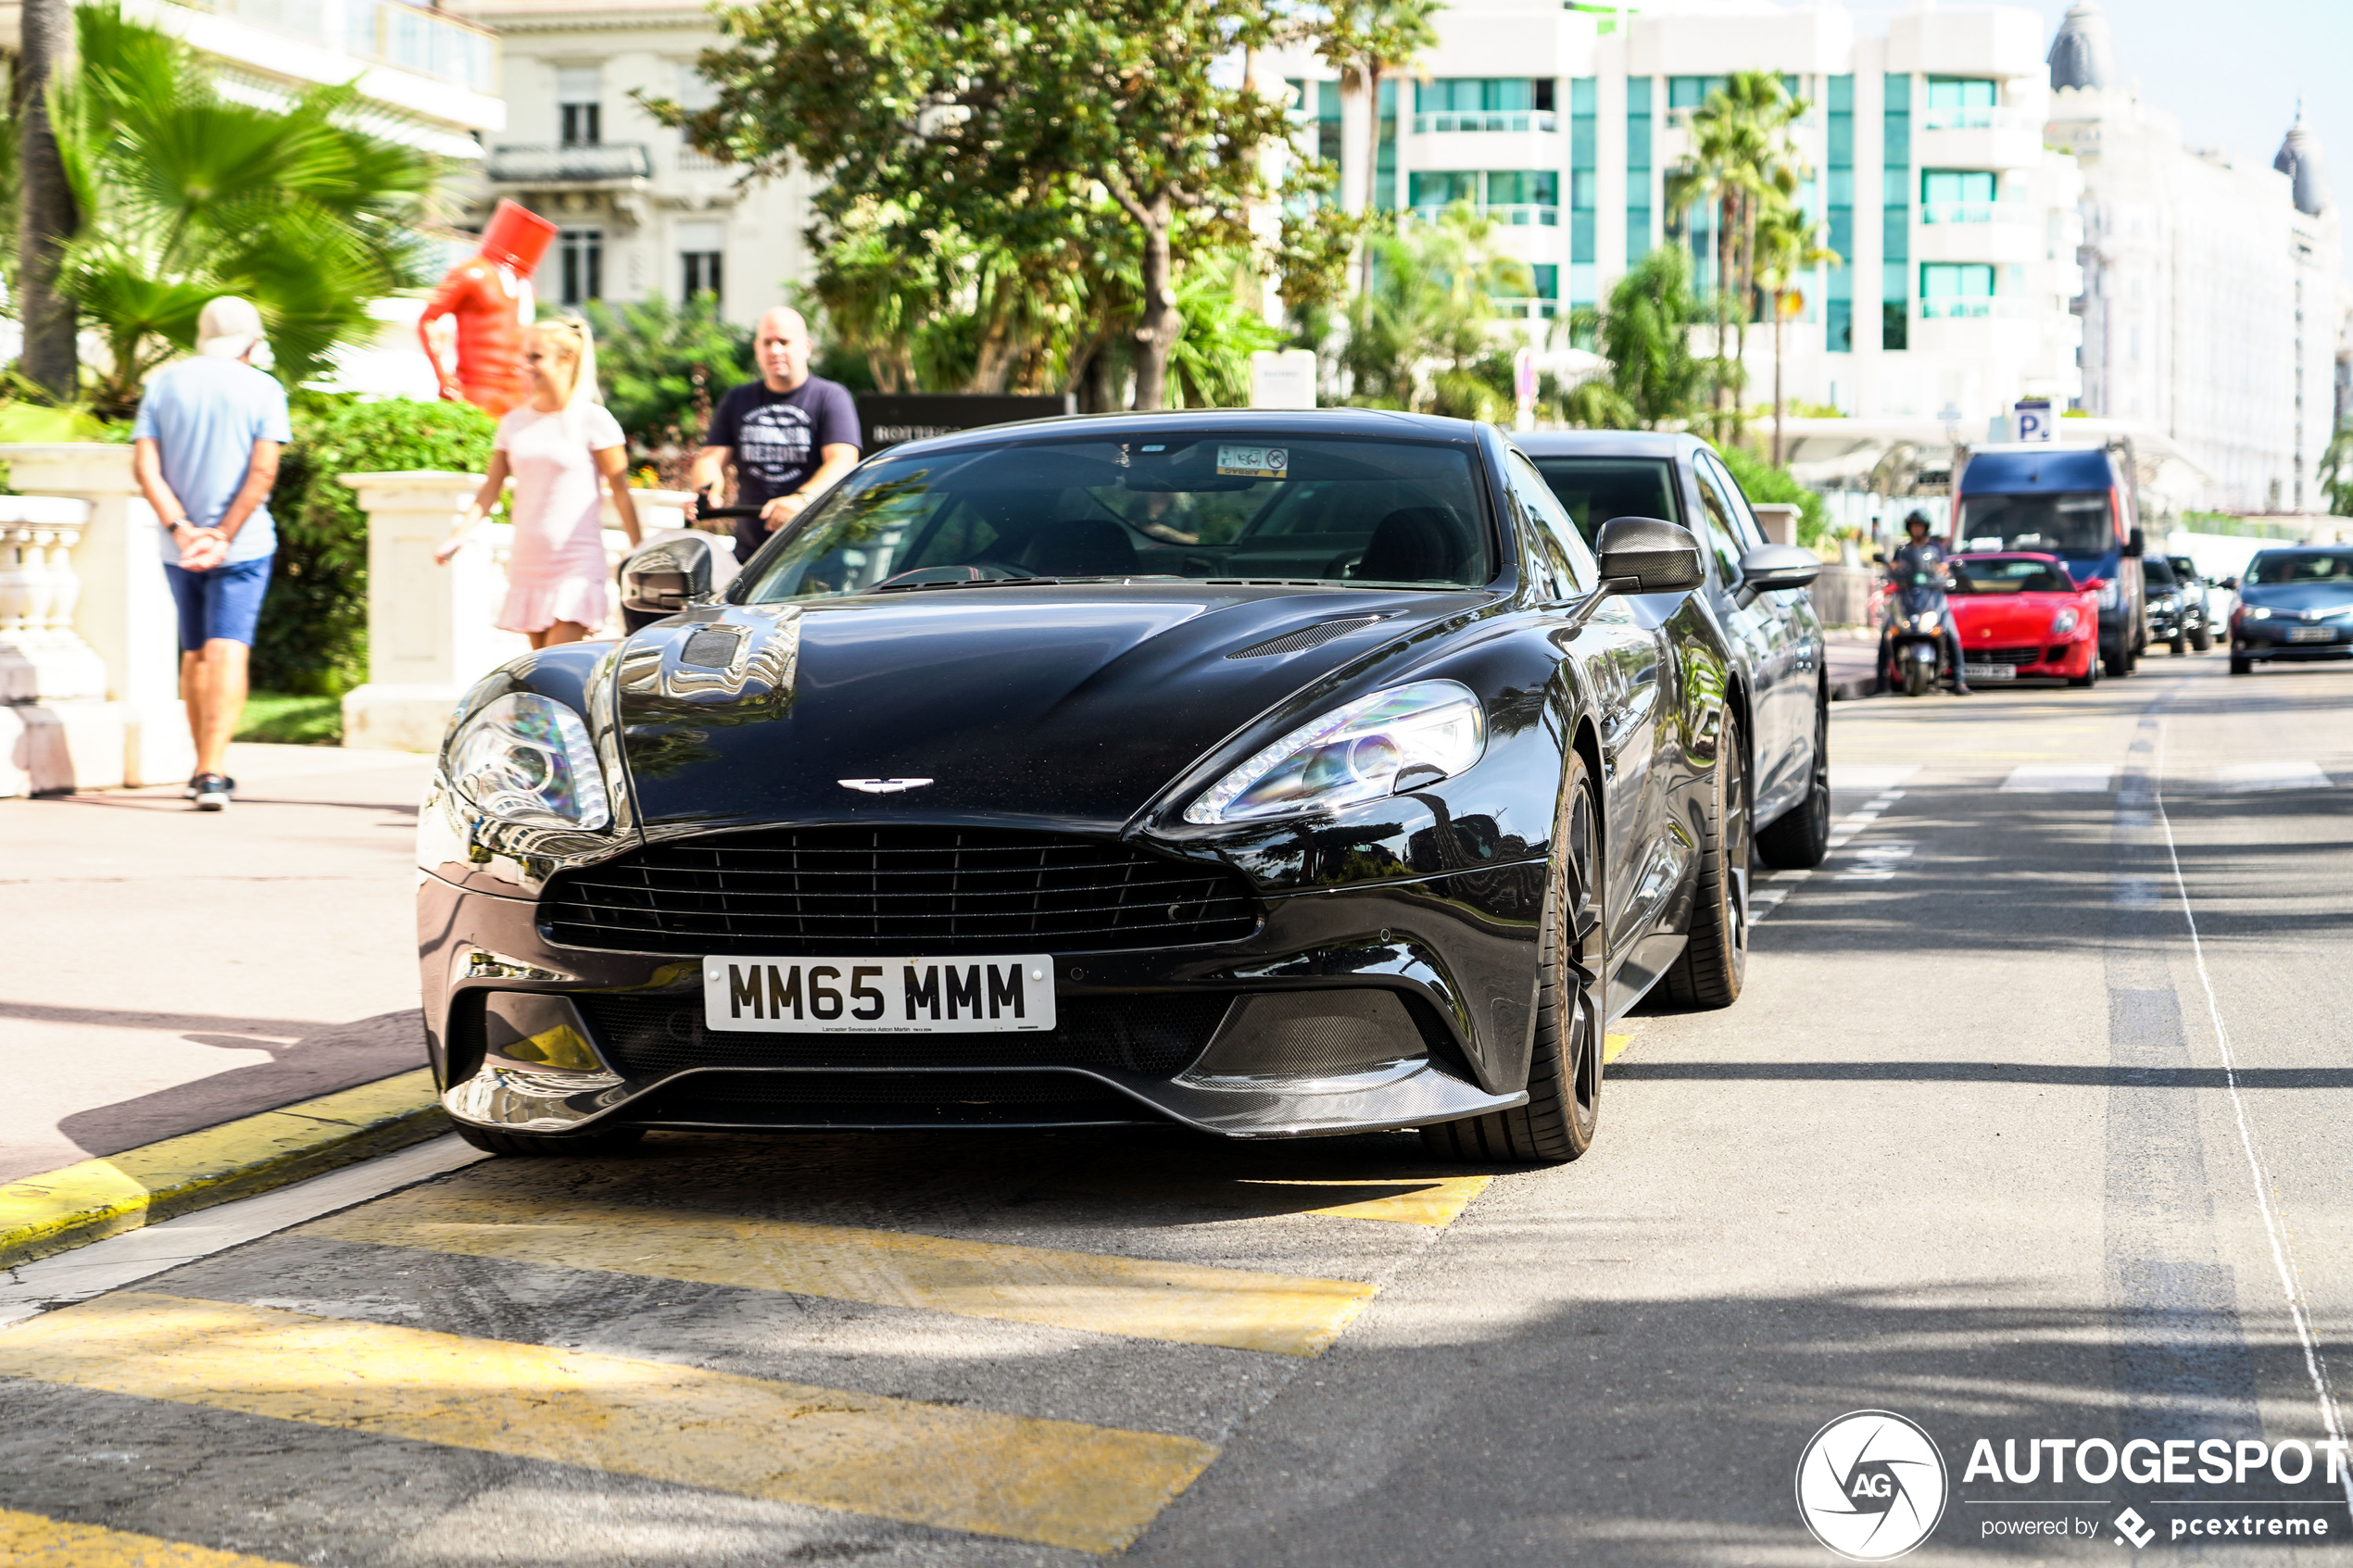 Aston Martin Vanquish 2015 Carbon Black Edition